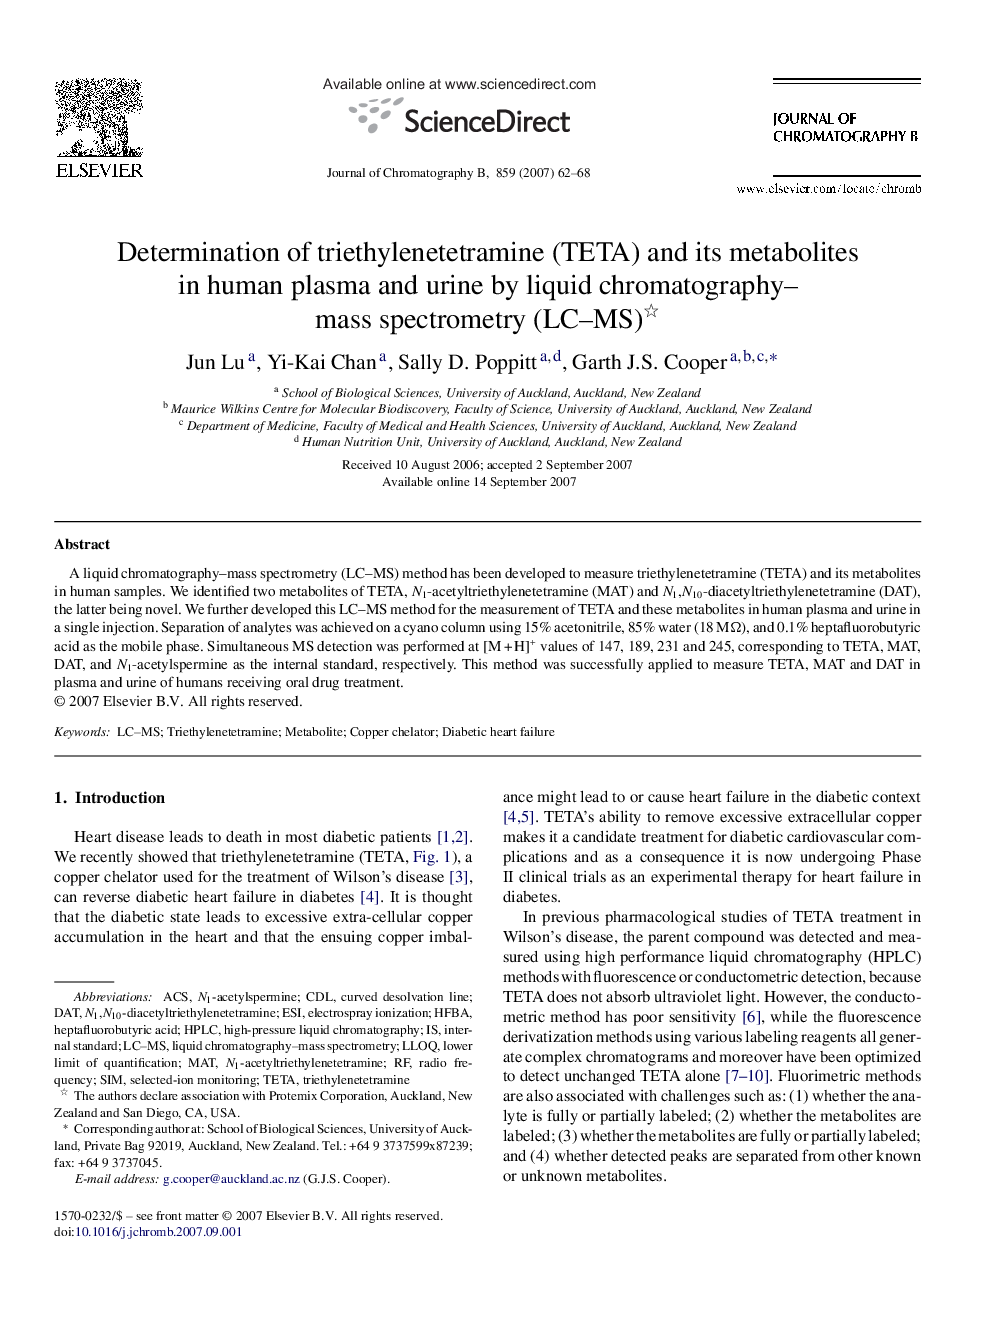 Determination of triethylenetetramine (TETA) and its metabolites in human plasma and urine by liquid chromatography–mass spectrometry (LC–MS) 